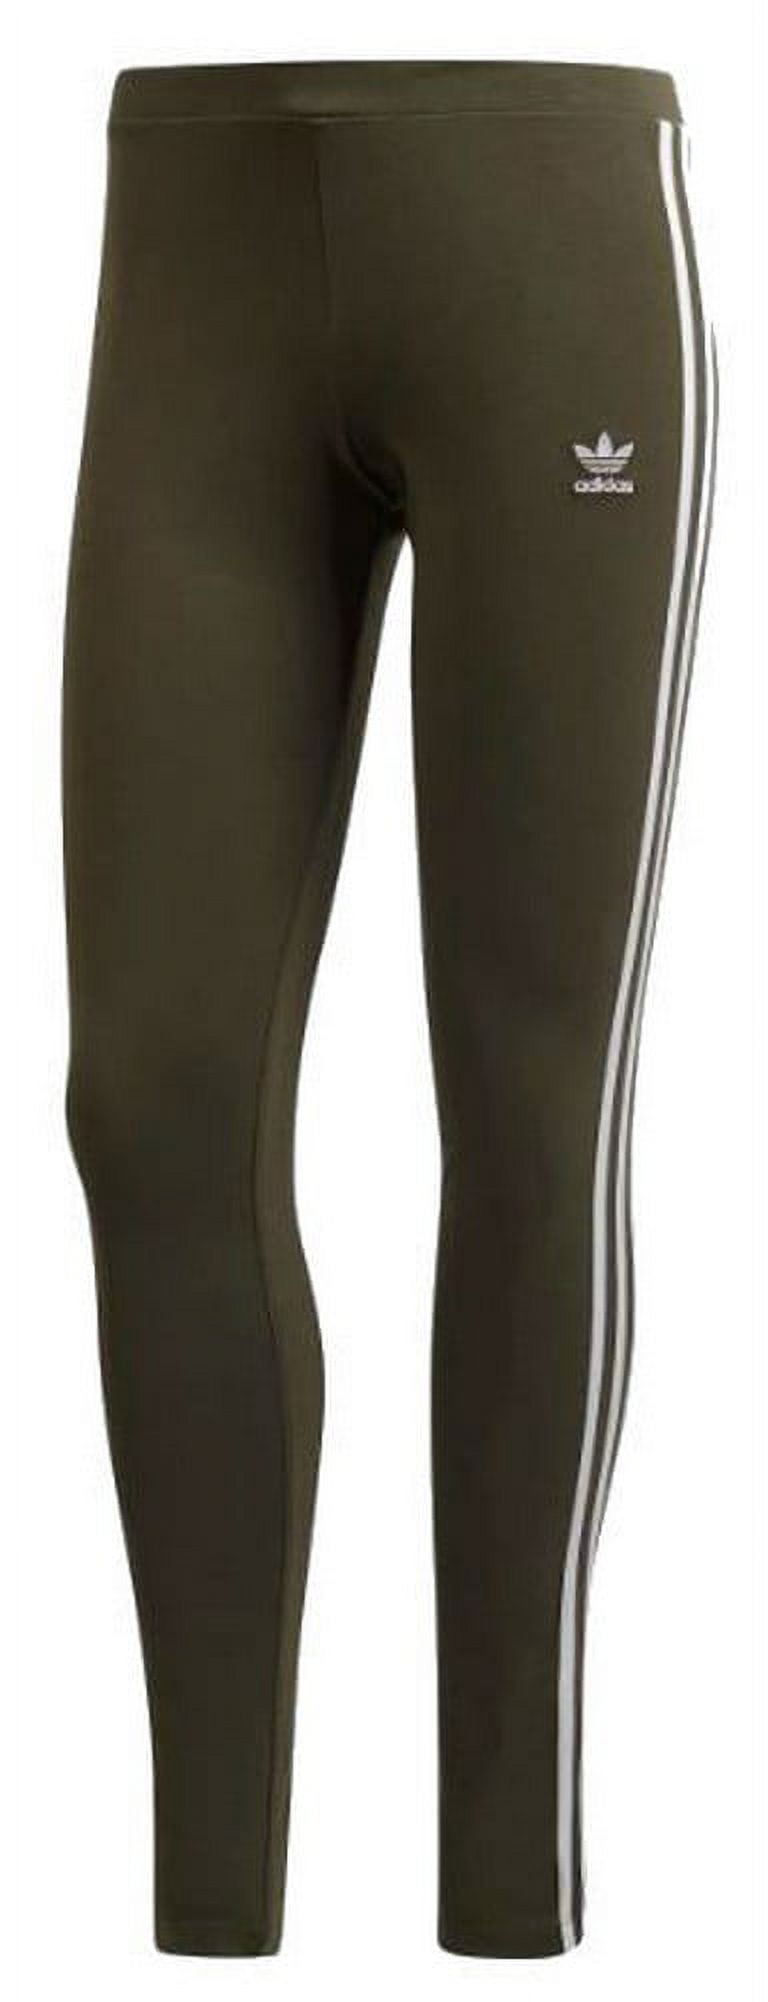 Adidas Women's 3 Stripe Tight Leggings Pants Joggers Athletic (Cargo Green,  XS)